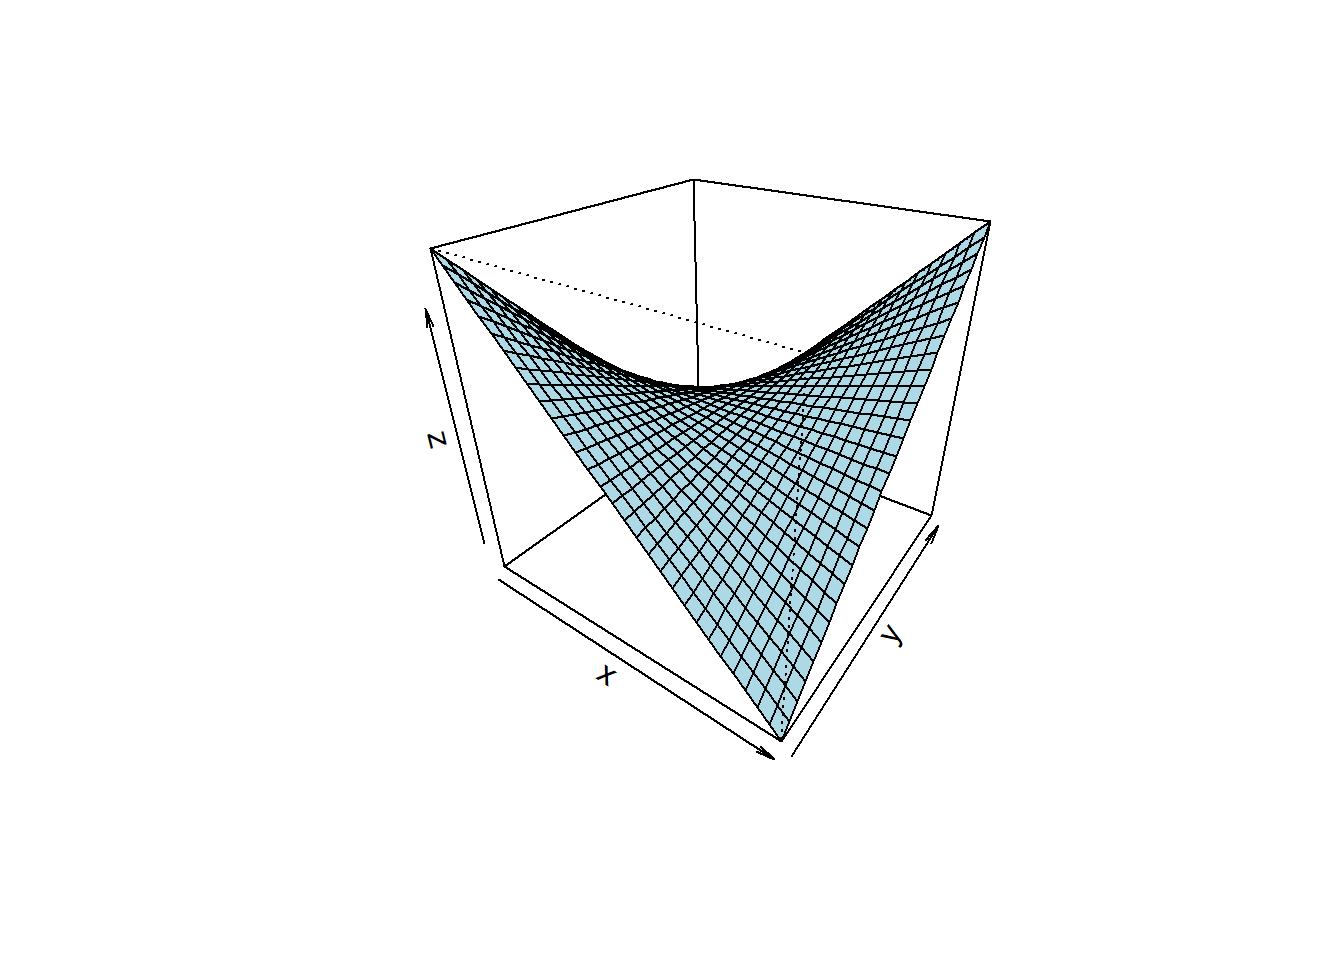 Bilinear parametric model $z=a_{0} + a_{1} \cdot x + a_{2} \cdot y + a_{3} \cdot x \cdot y$.